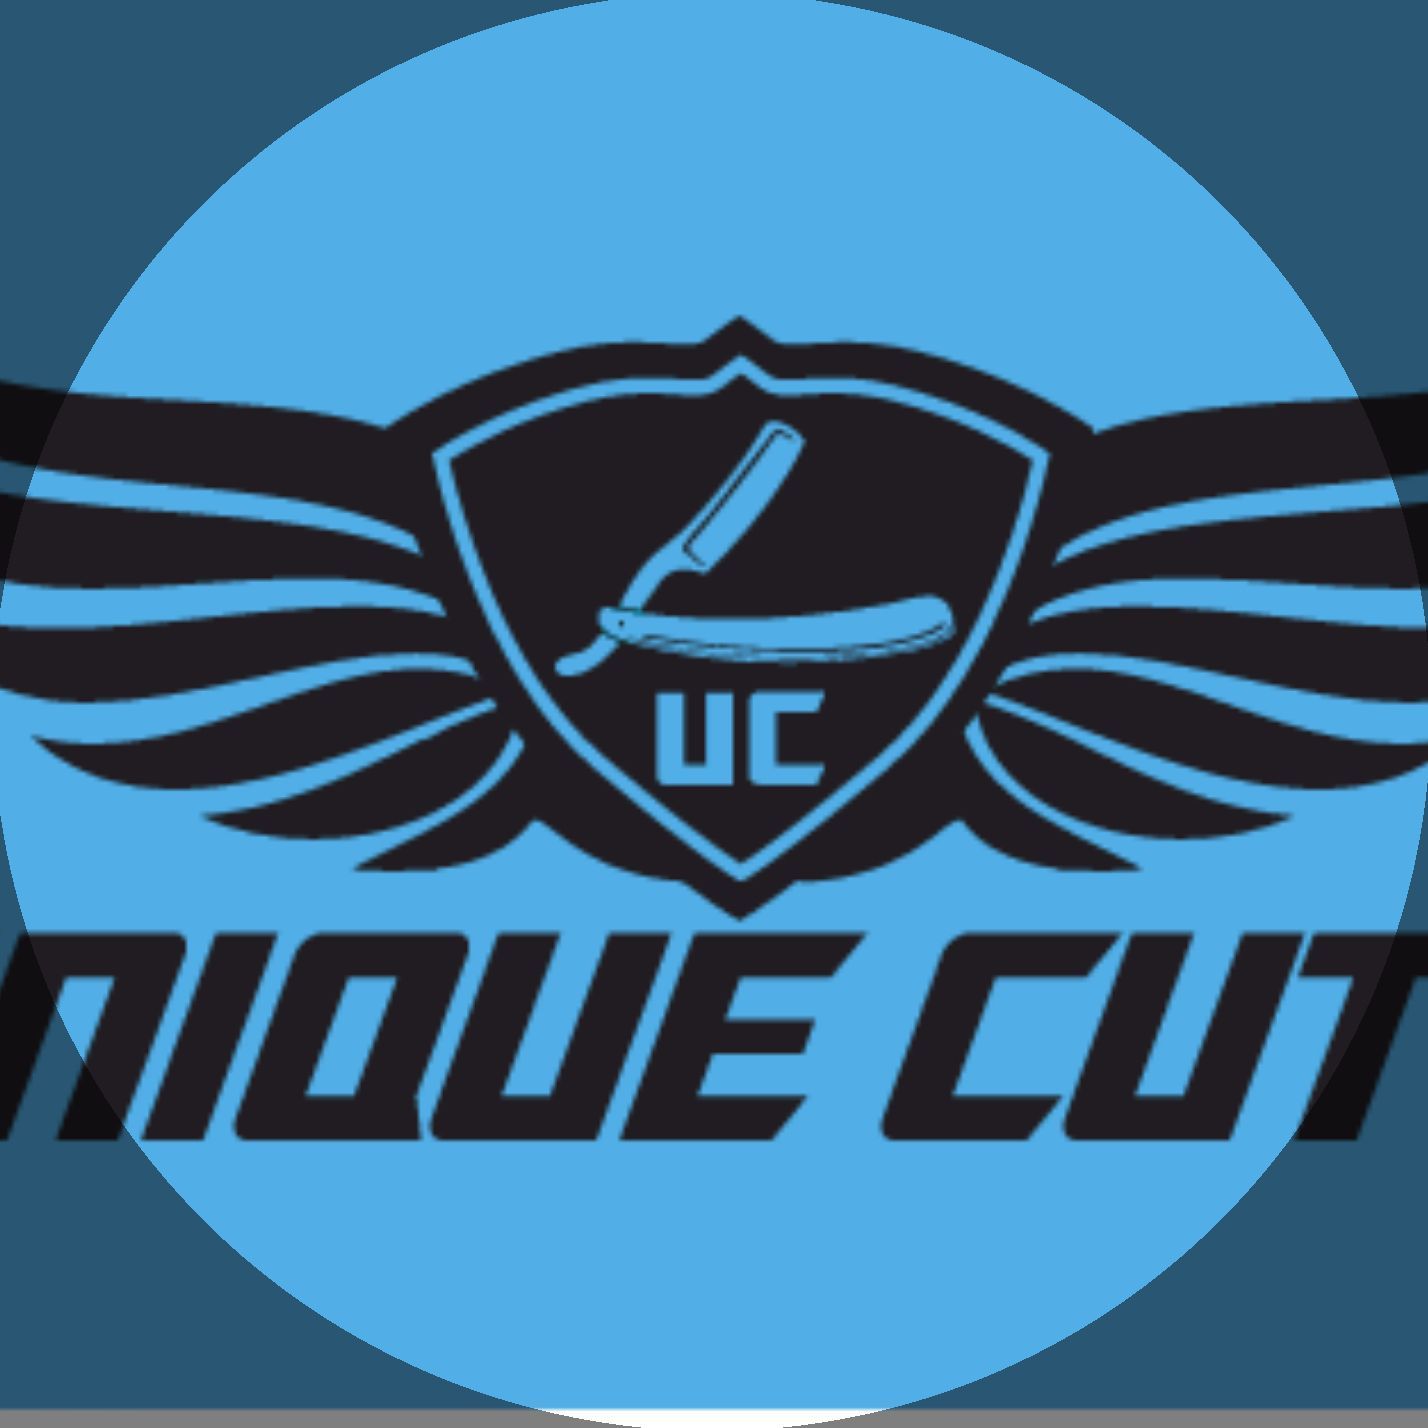 Unique Cuts, 829 S Green Bay Rd, Racine, 53406